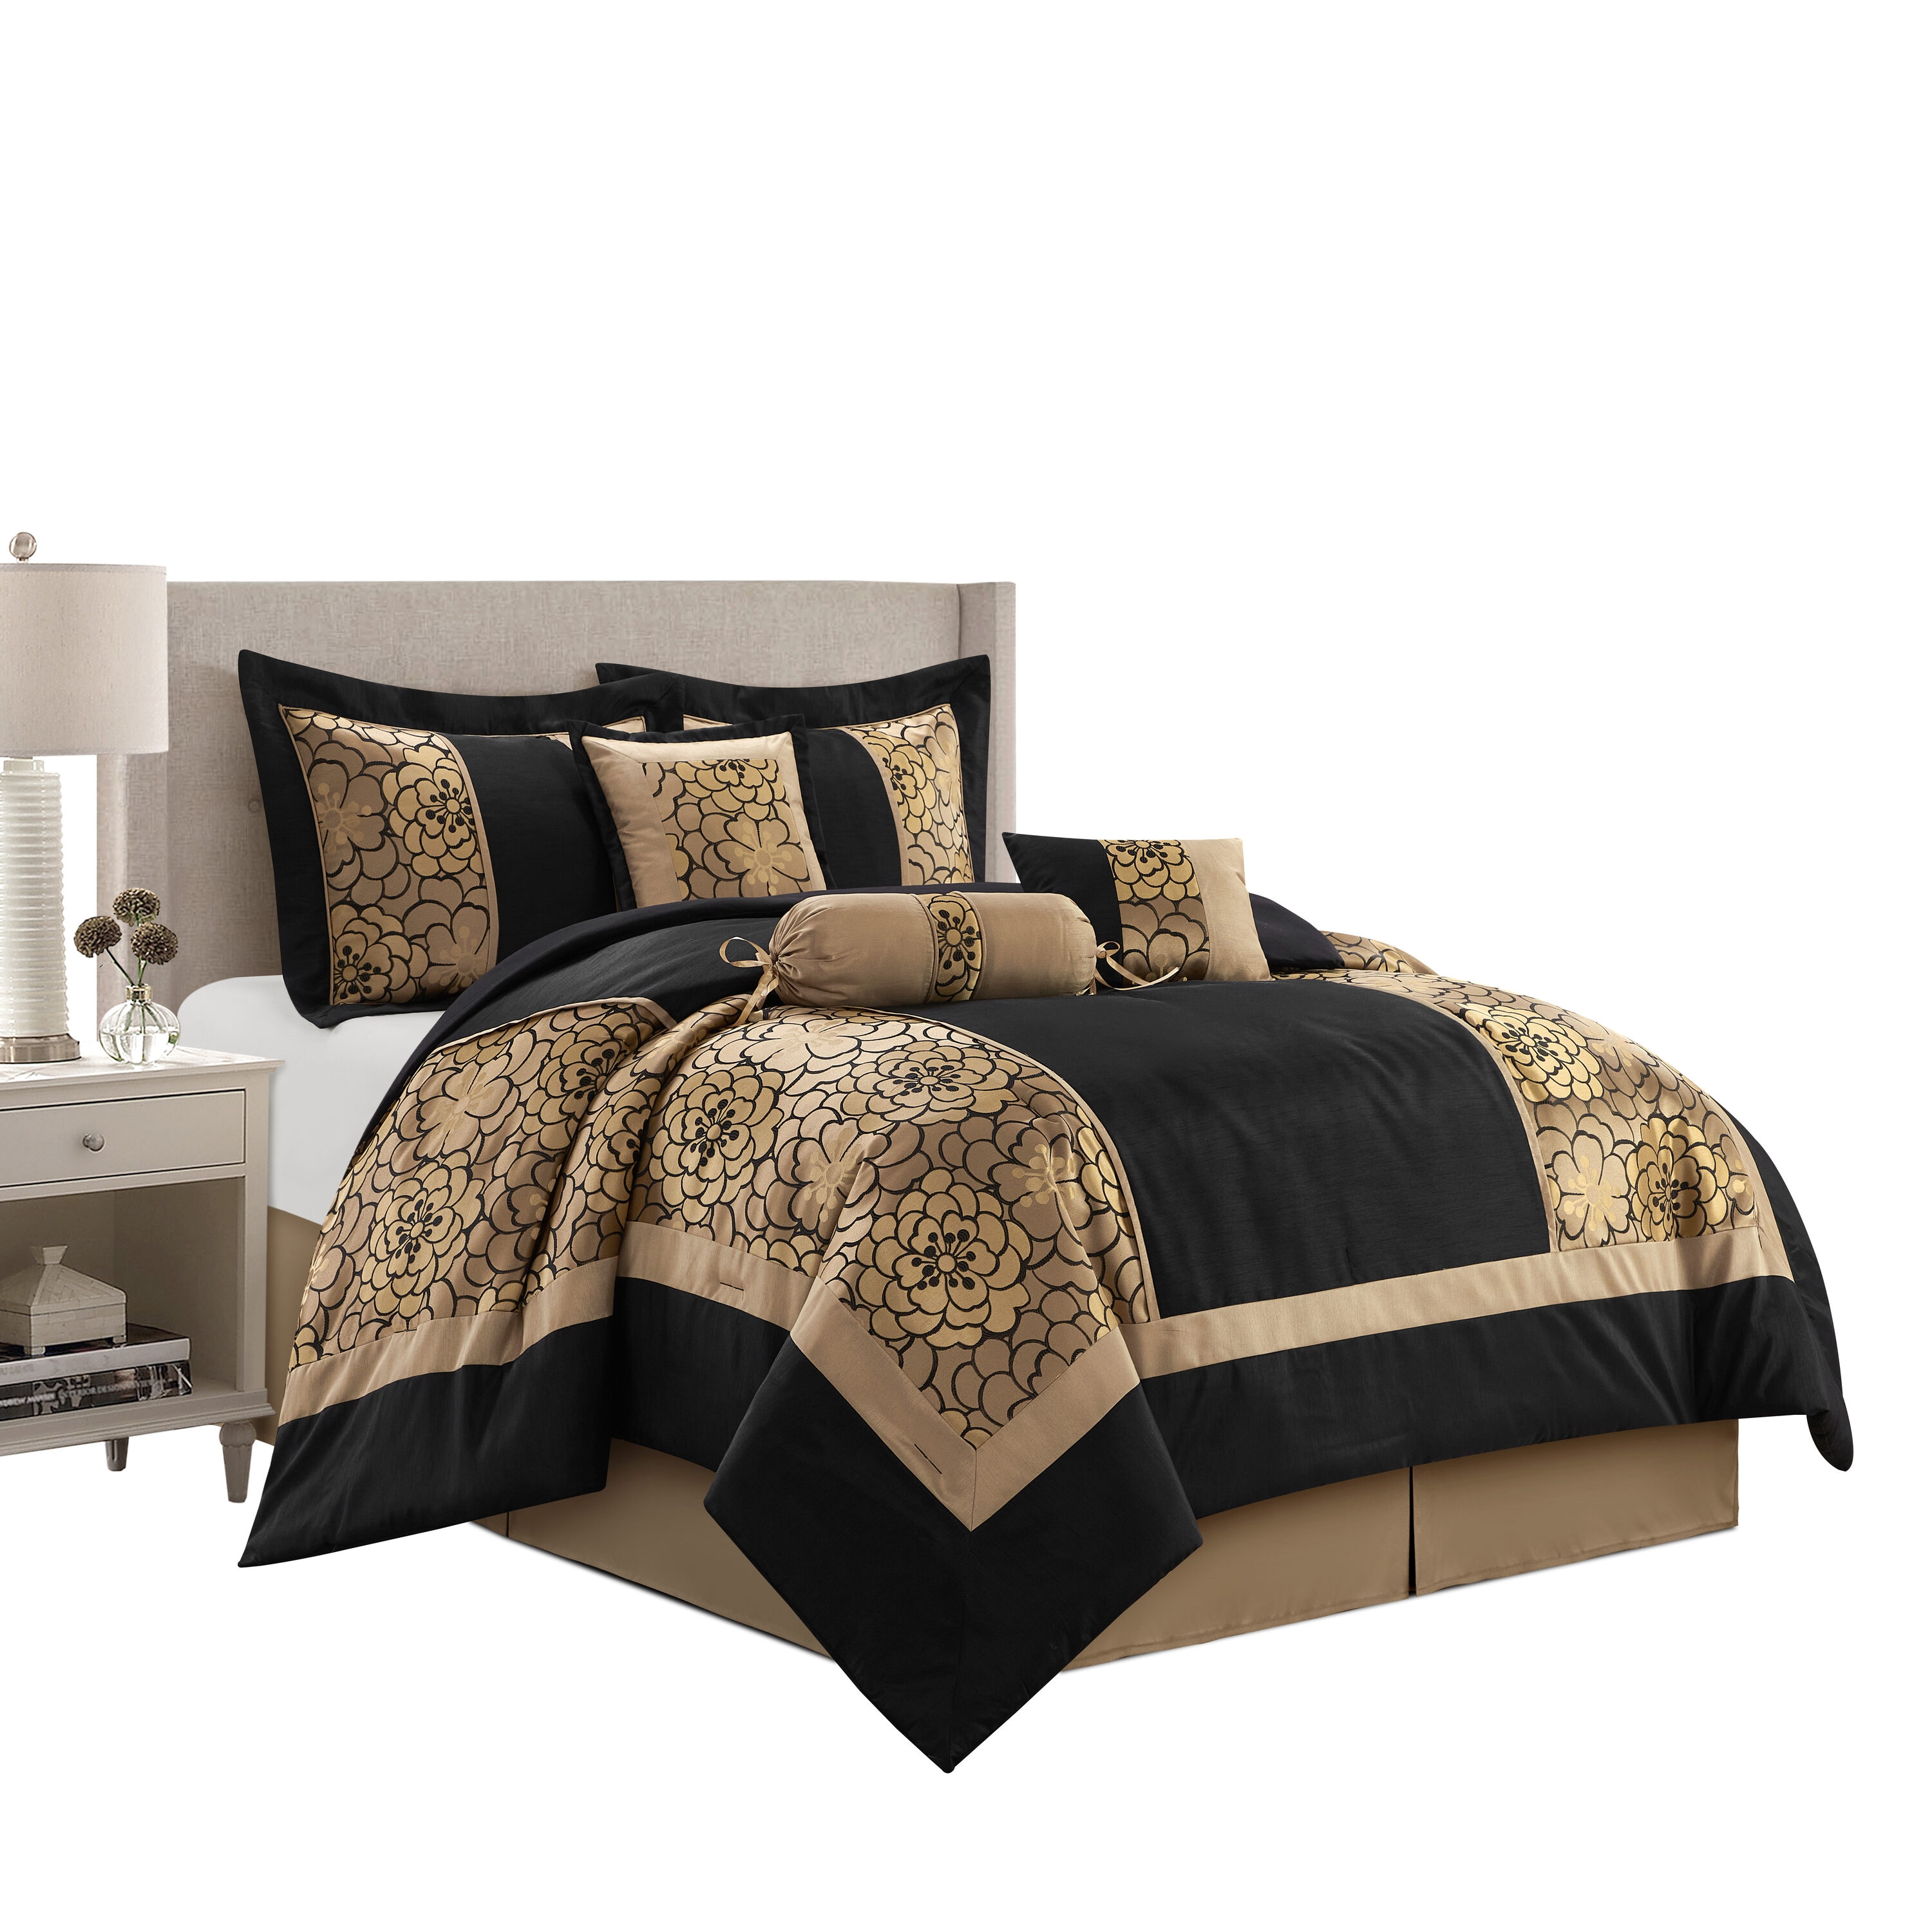 Grand Avenue Kitana 7-Piece Black/Gold King Comforter Set in the